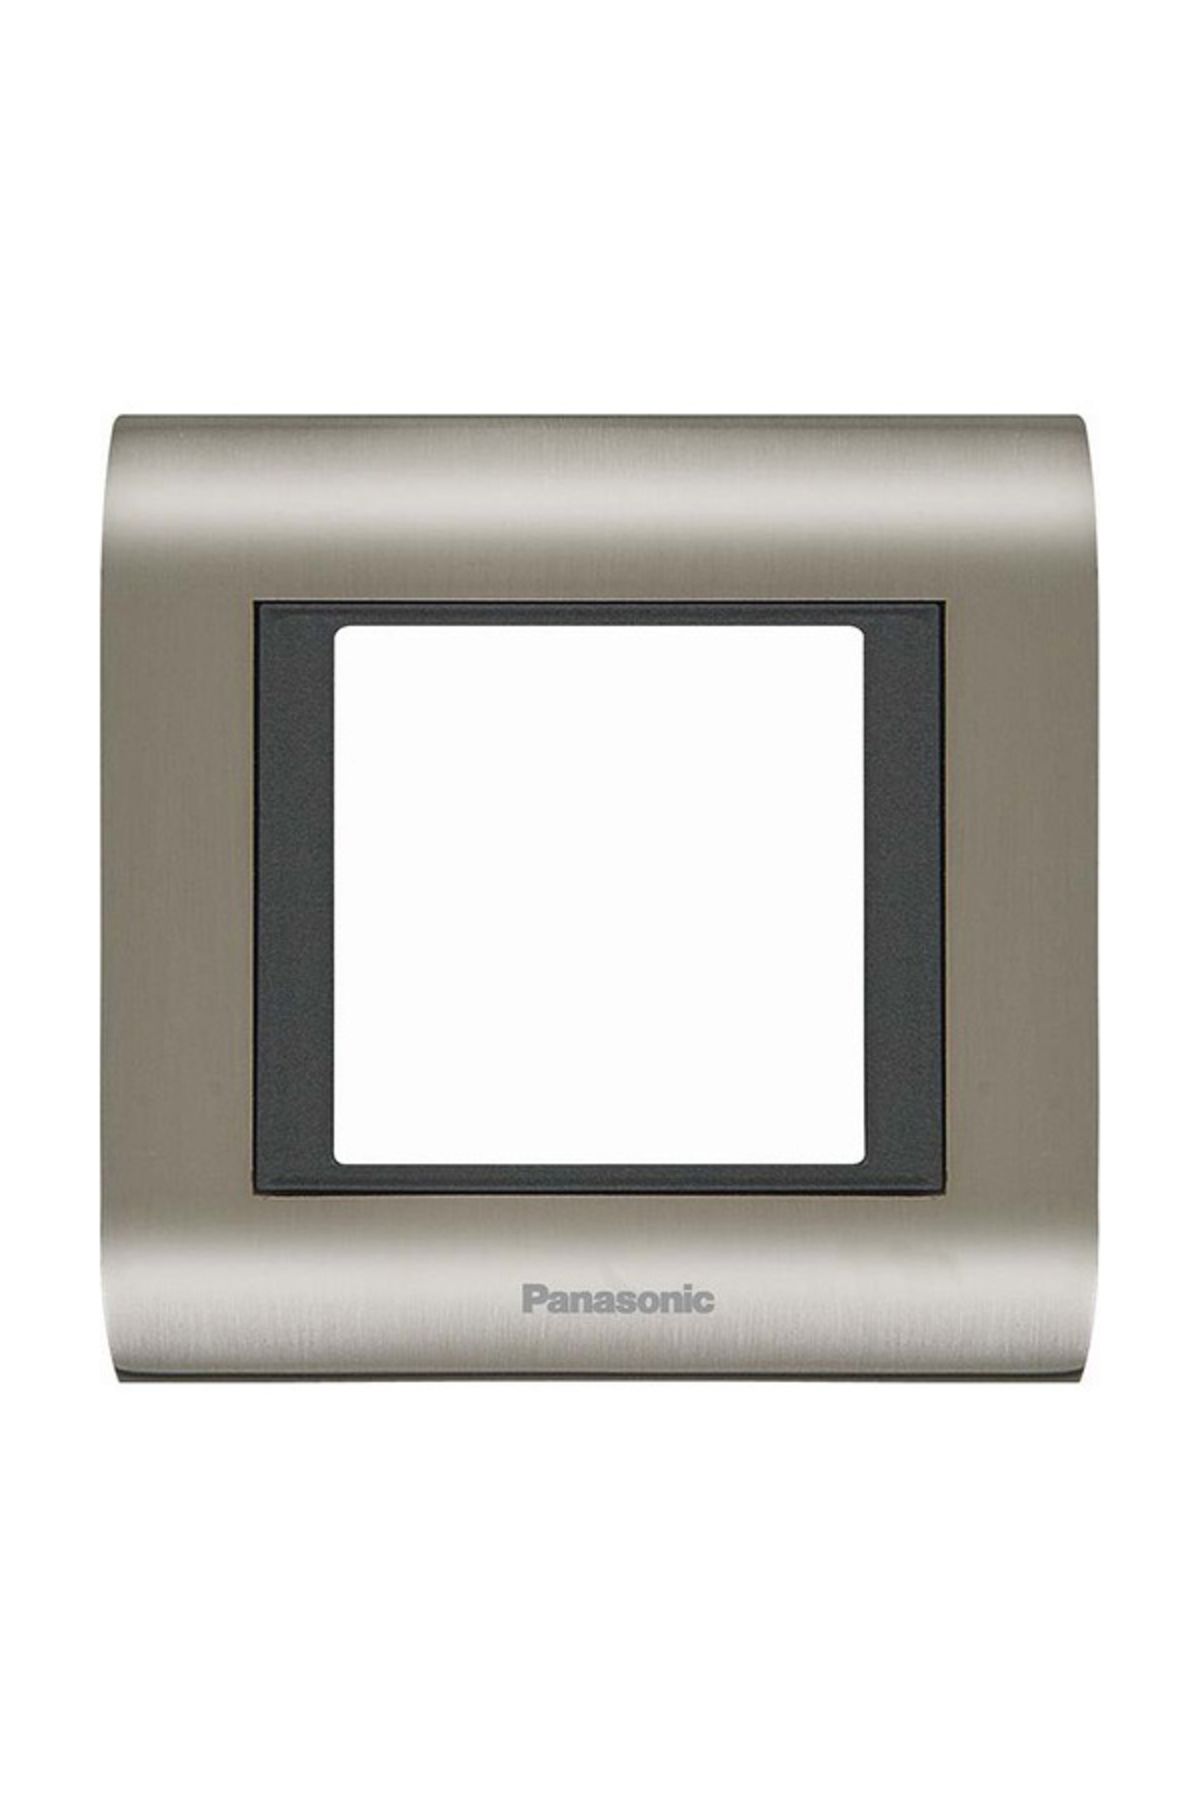 Panasonic Thea Sistema Inox Füme 2m Çerçeve - 5 Adet